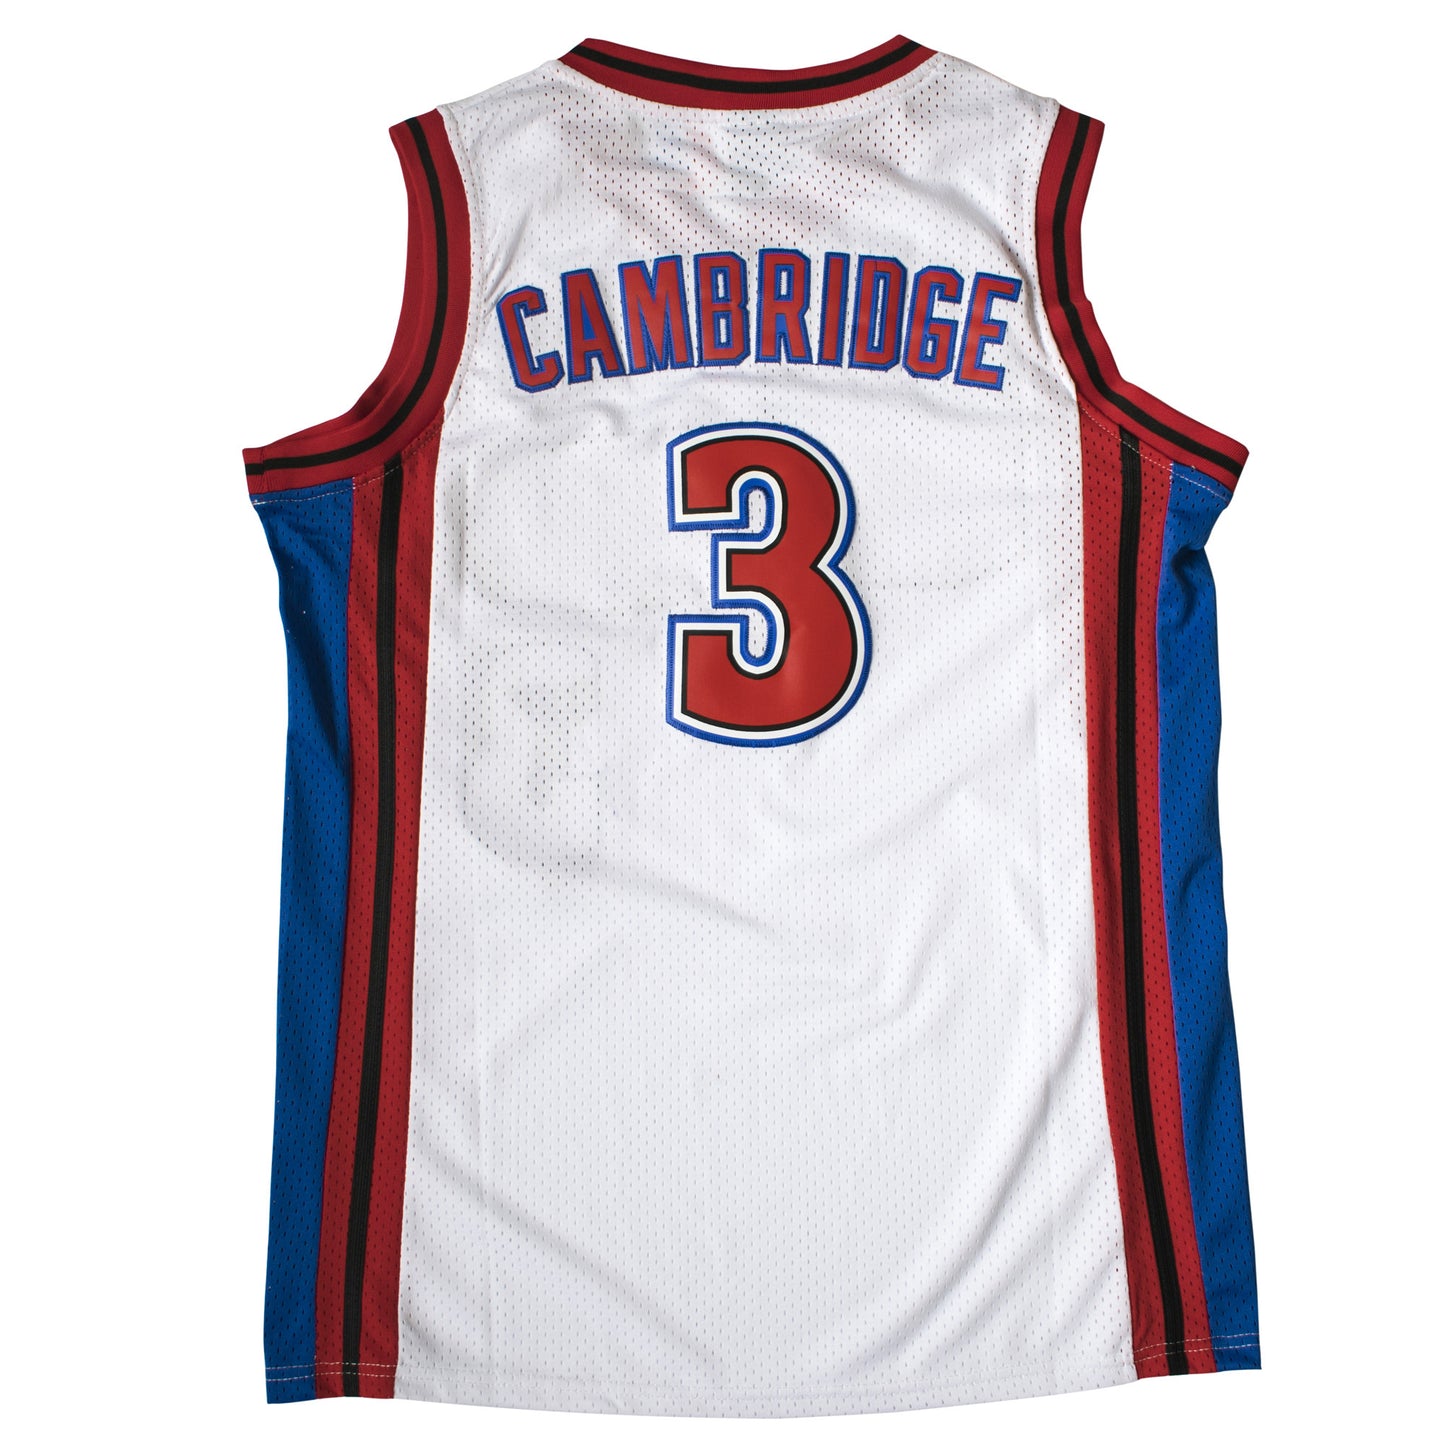 Calvin Cambridge 3 LA Knights Basketball Jersey Like Mike Movie Red